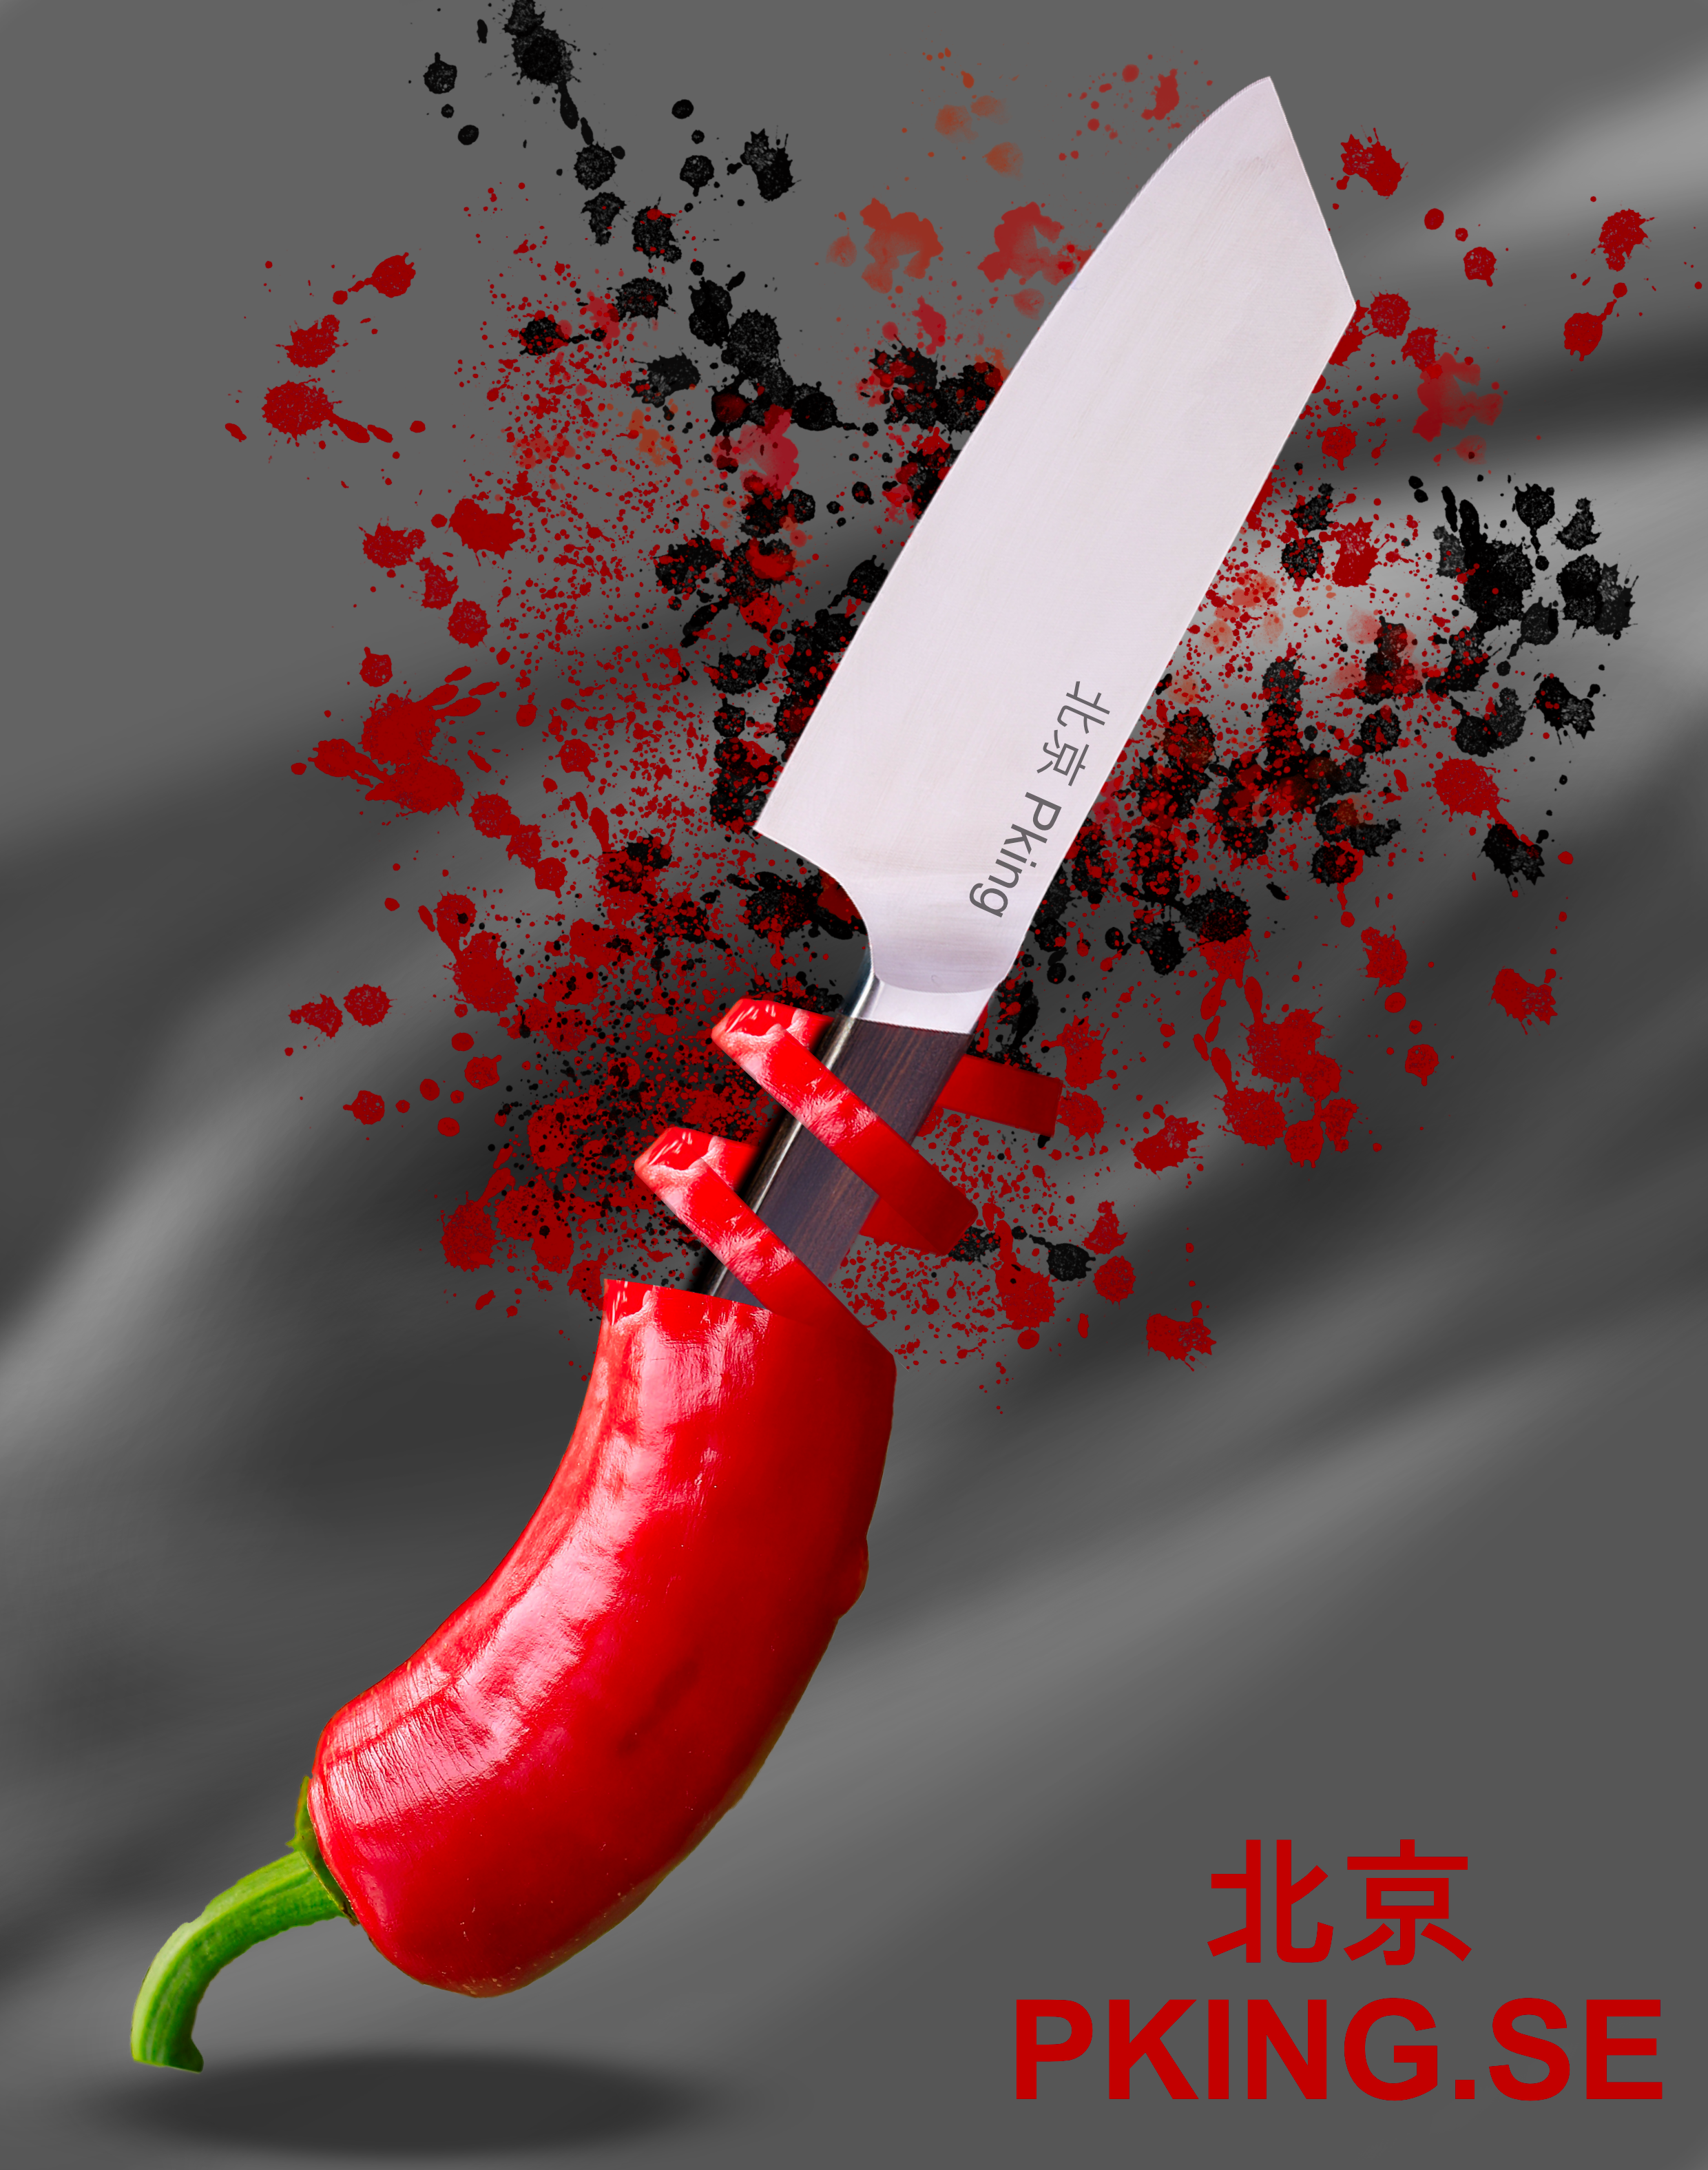 Pking chilli knife